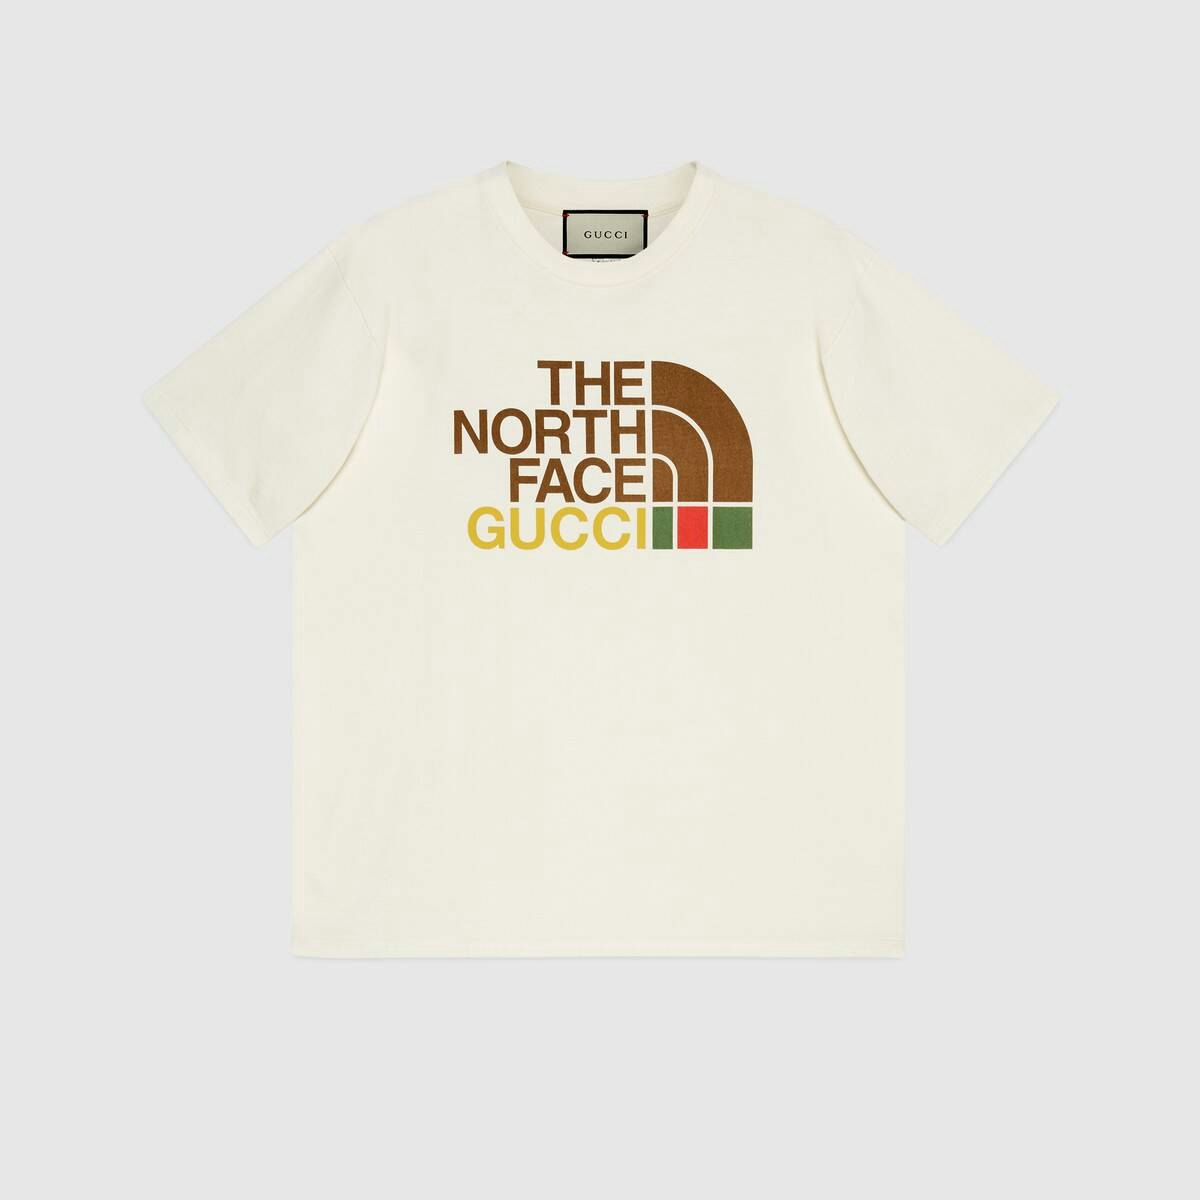 gucci tshirt online